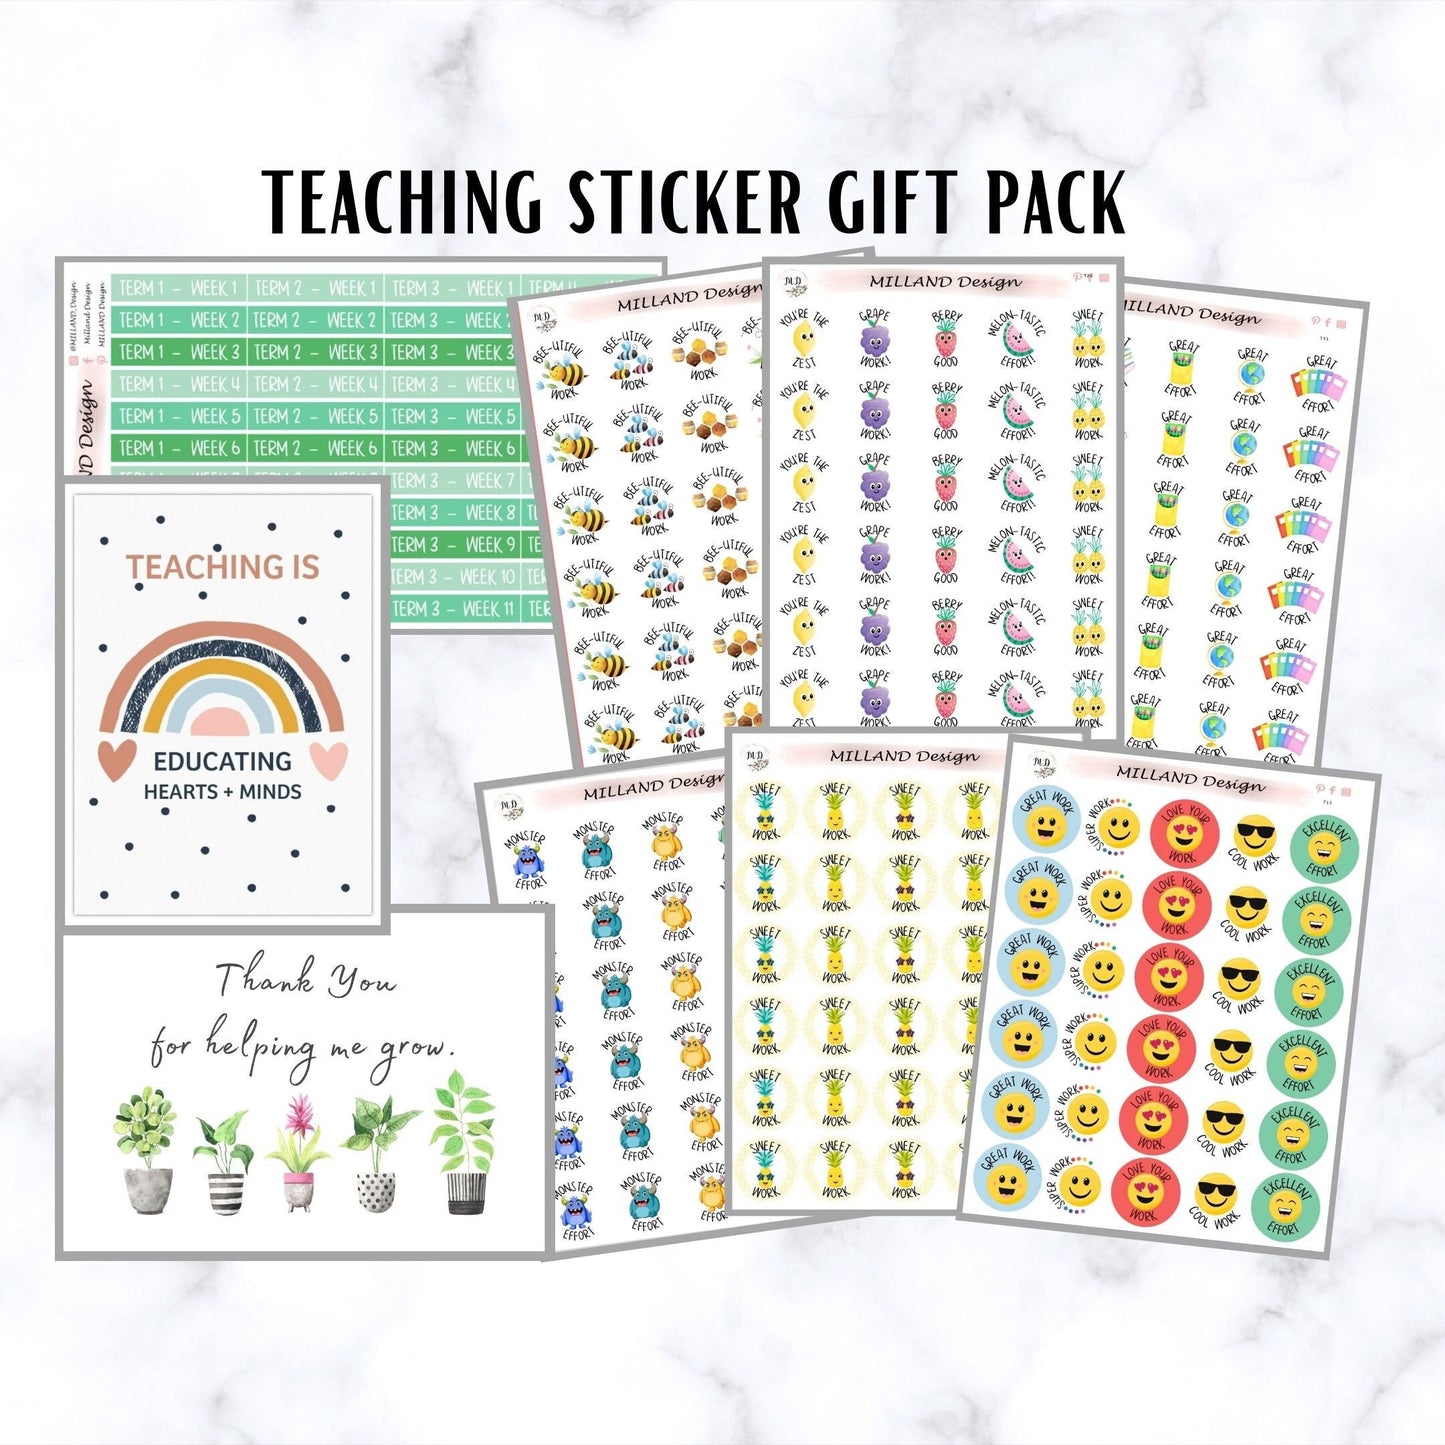 Teaching Sticker Gift Pack